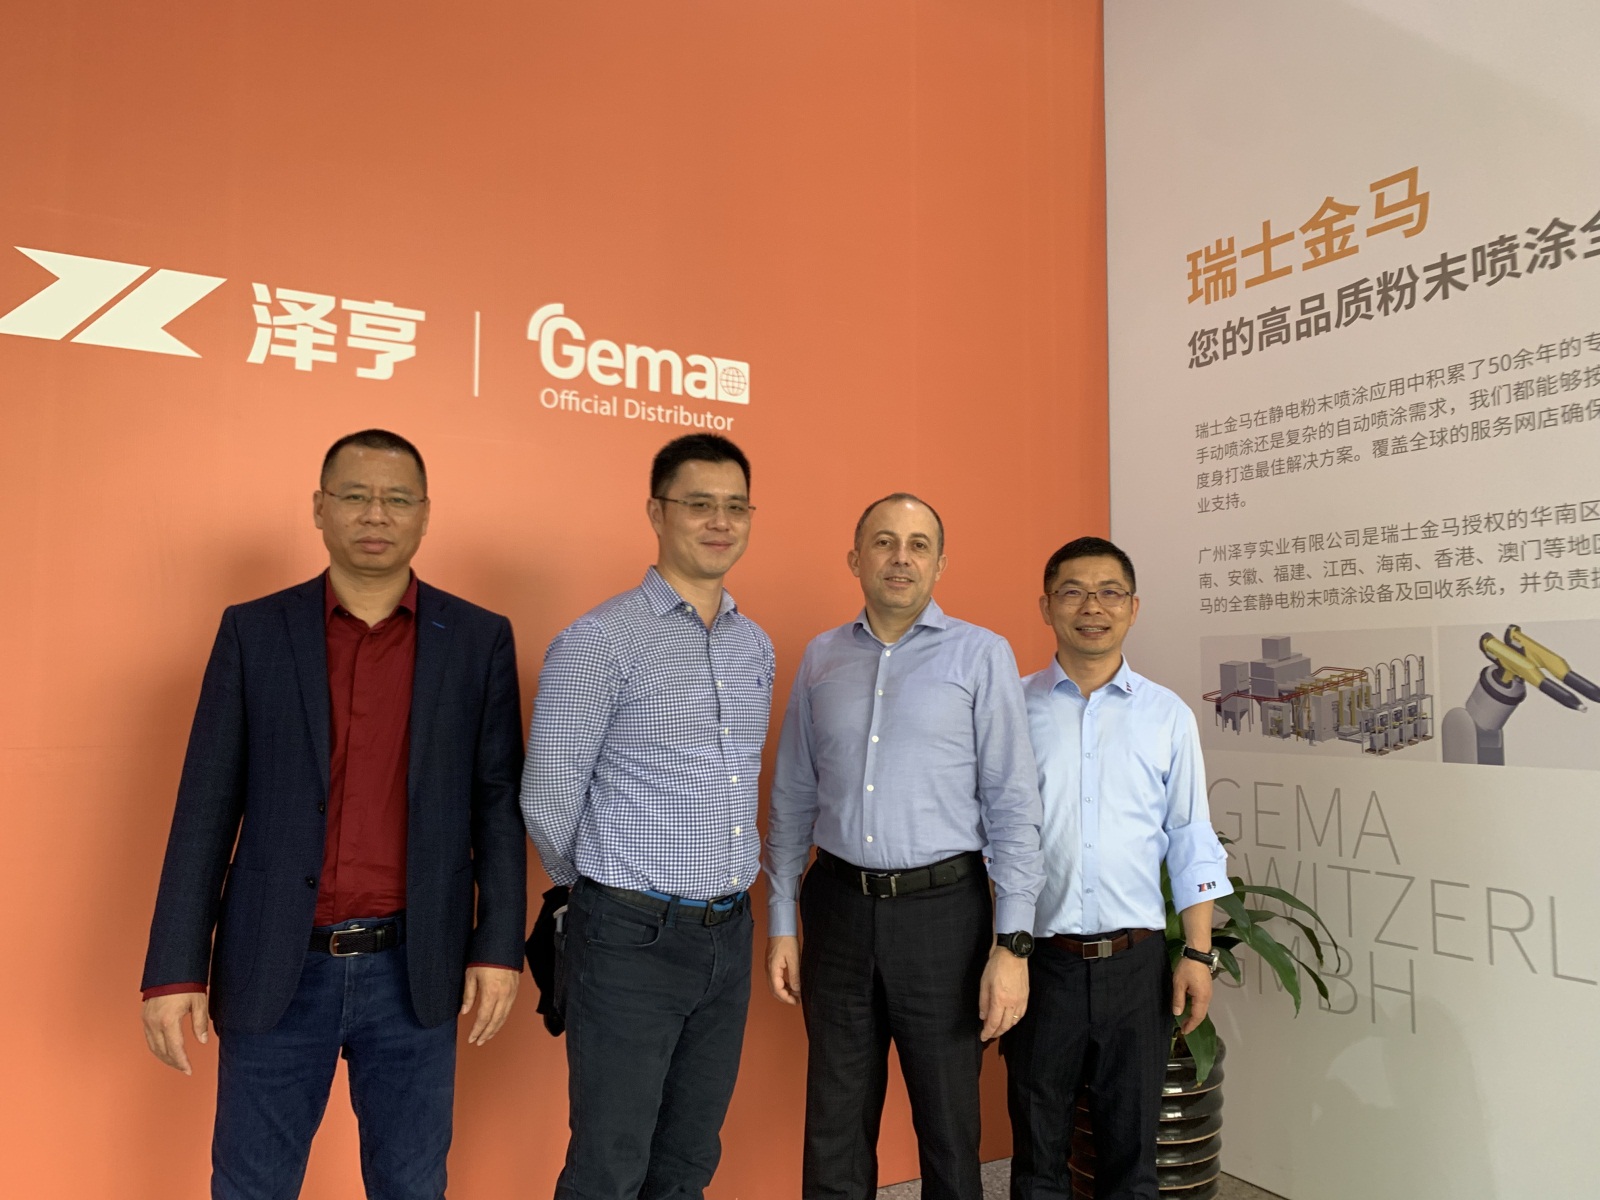 Claudio Merengo, the CEO of Gema Switzerland GmbH, visited us in 2019